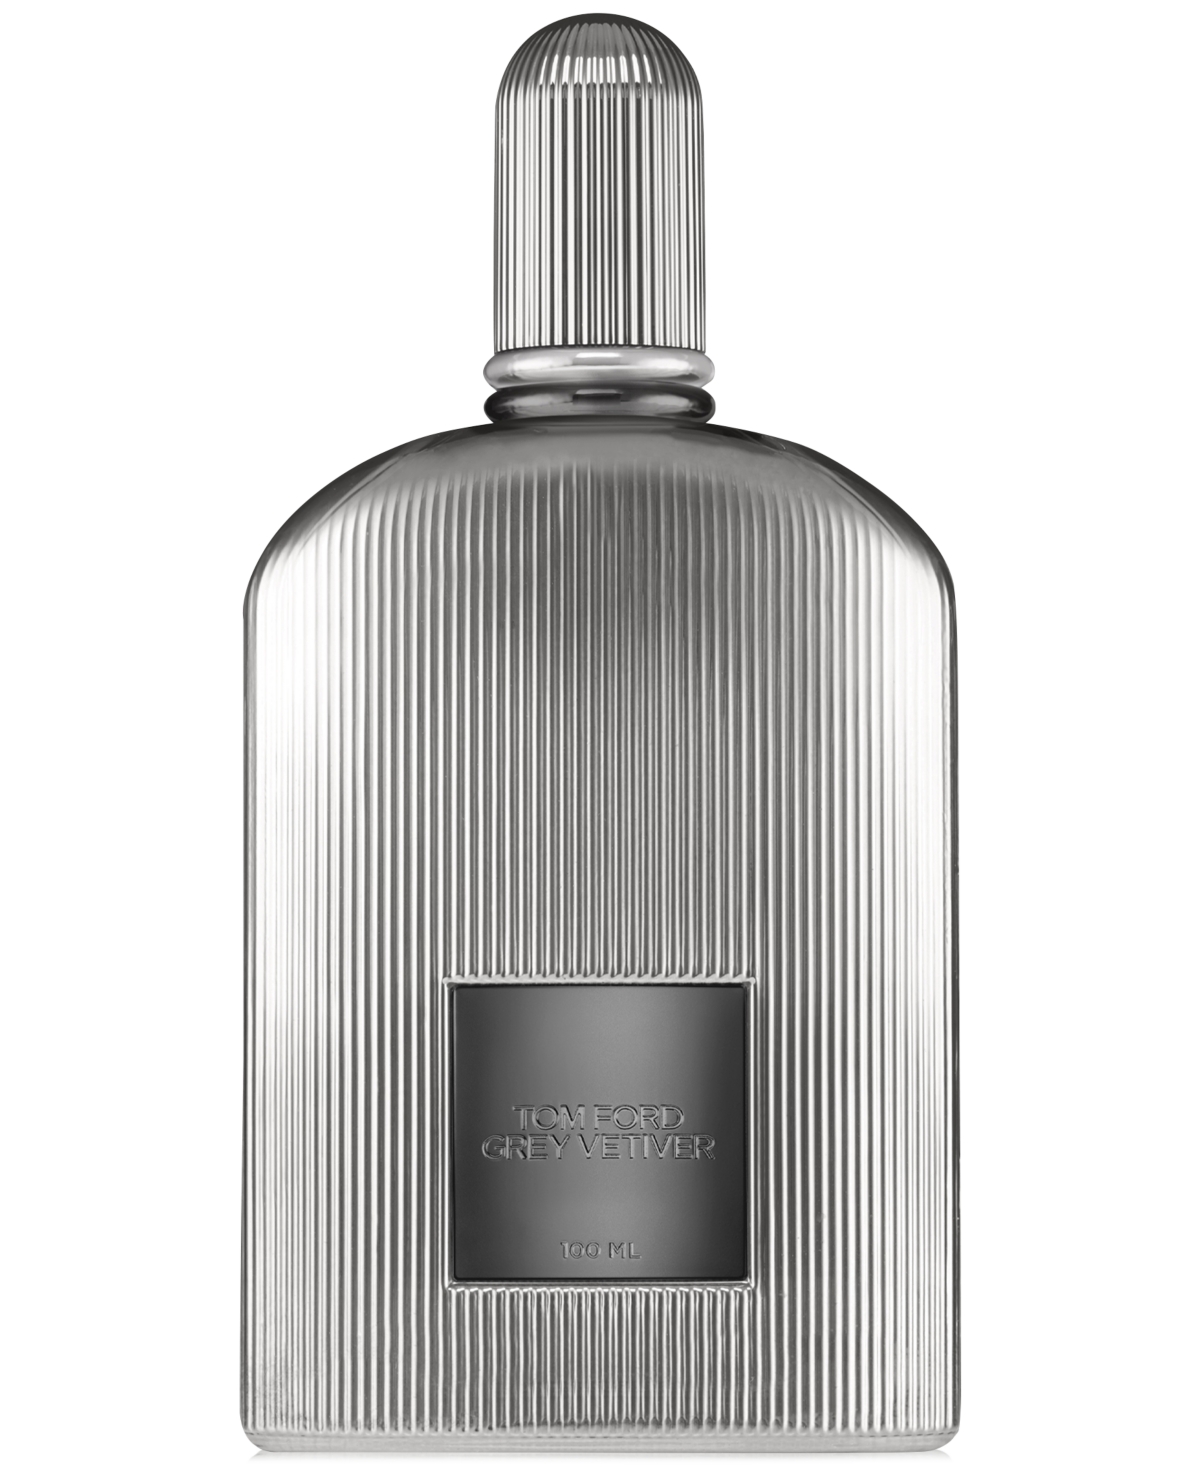 Tom Ford Men's Grey Vetiver Parfum Spray, 3.4 Oz.